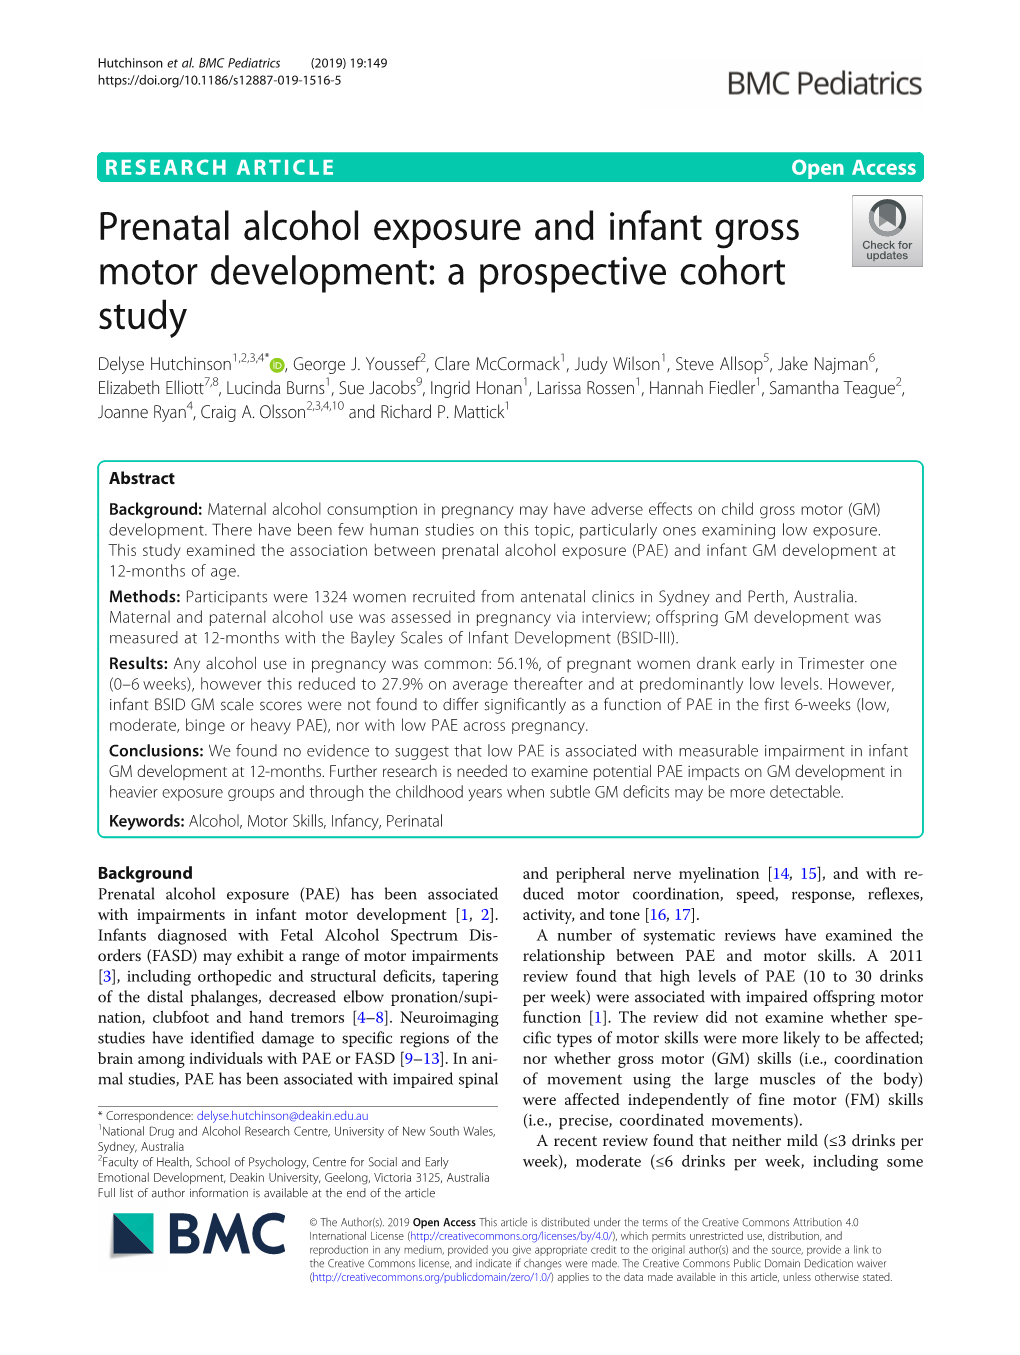 Prenatal Alcohol Exposure and Infant Gross Motor Development: a Prospective Cohort Study Delyse Hutchinson1,2,3,4* , George J